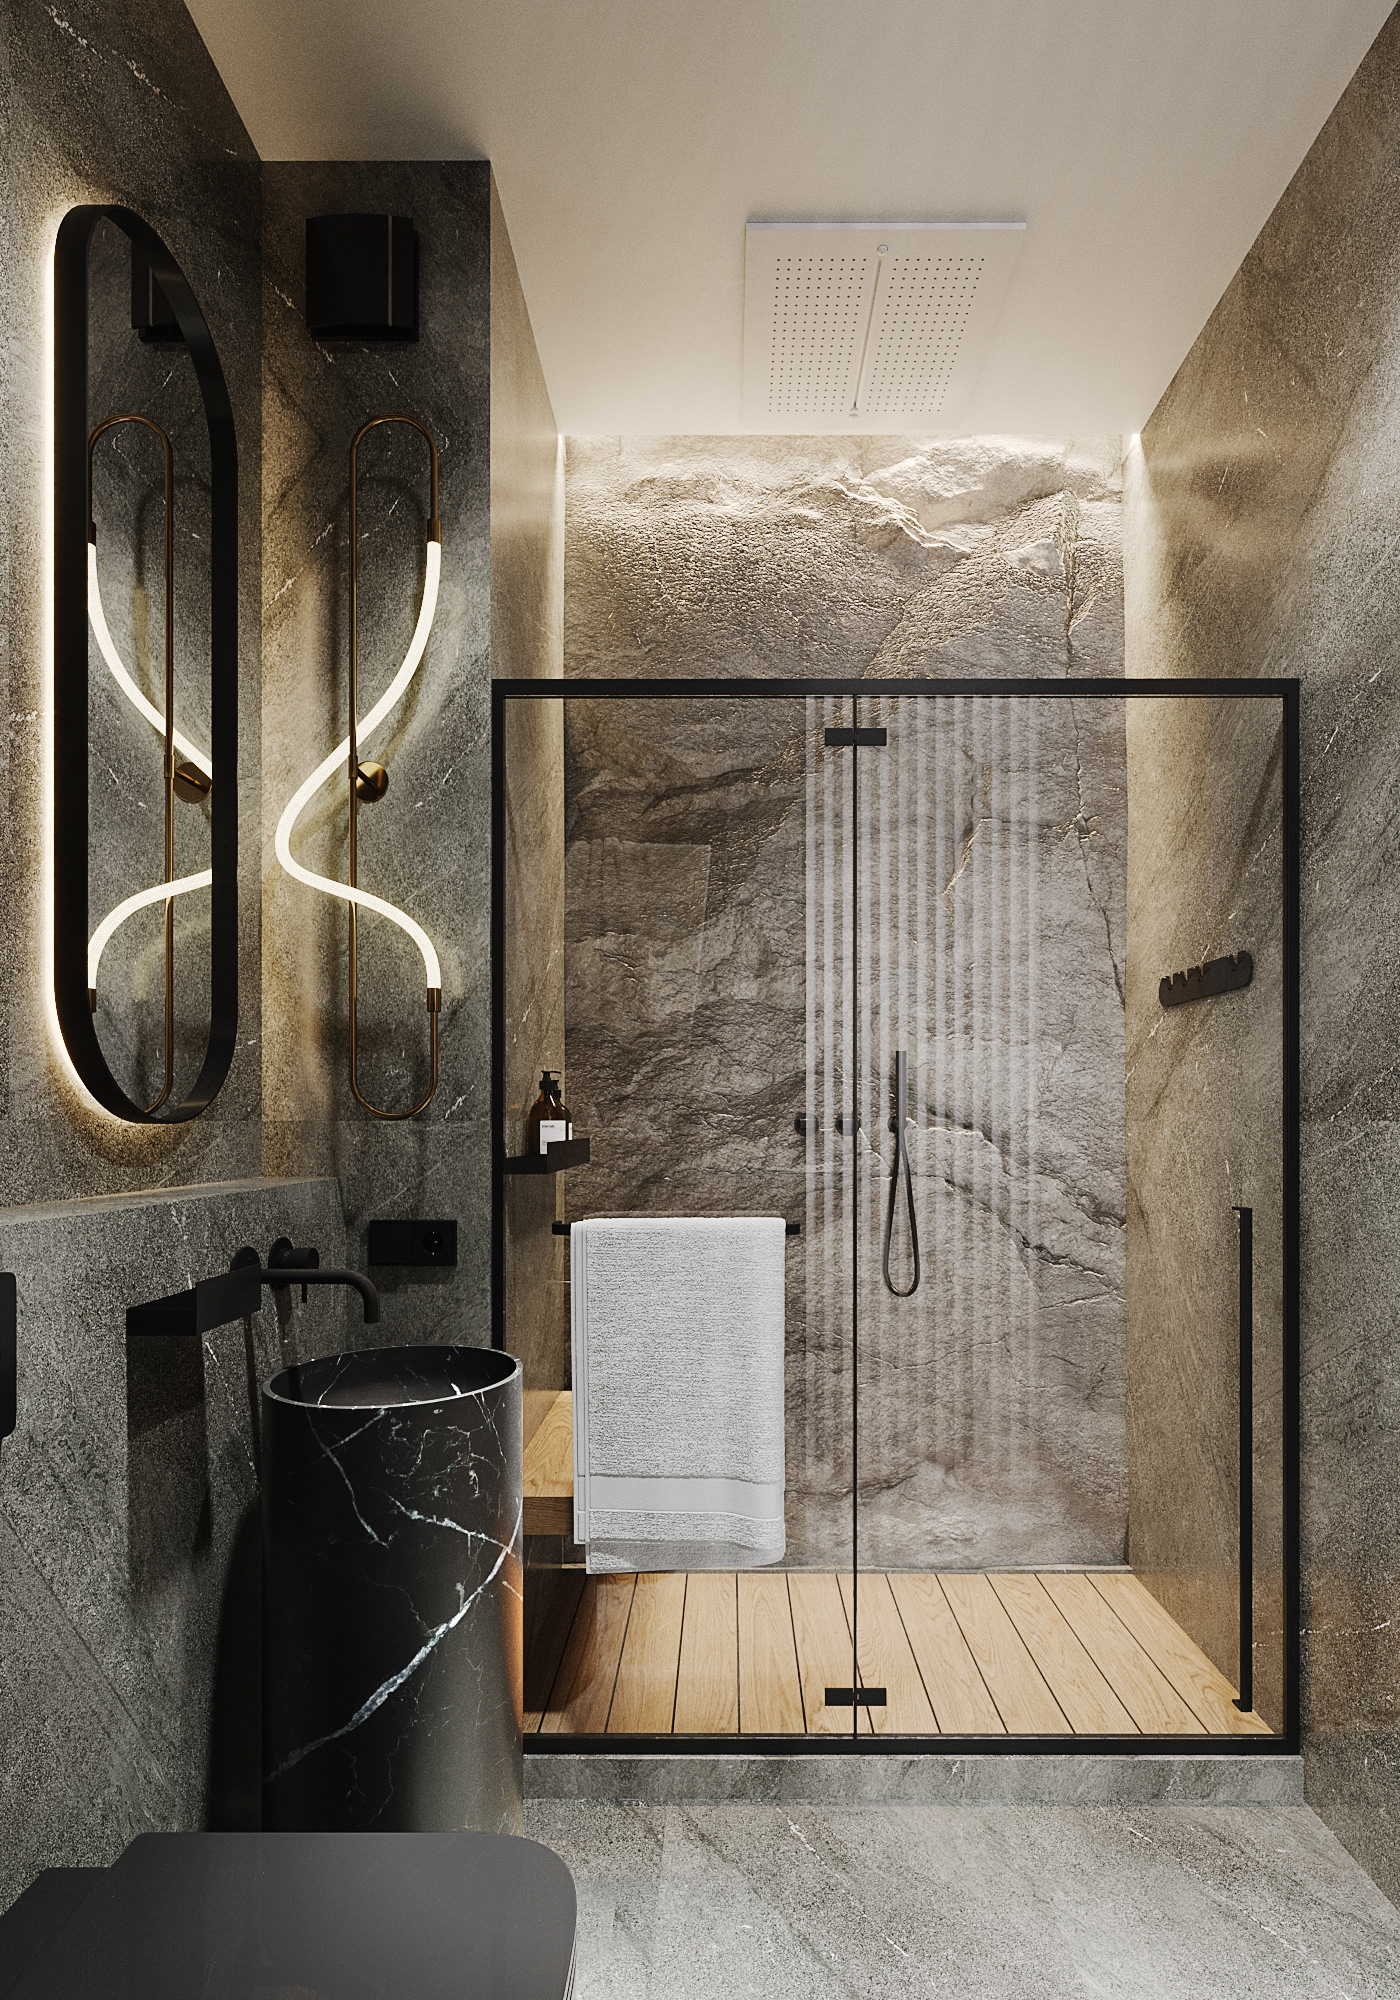 design for living interior design  archvis bathroom bedroom Interior kitchen visualization